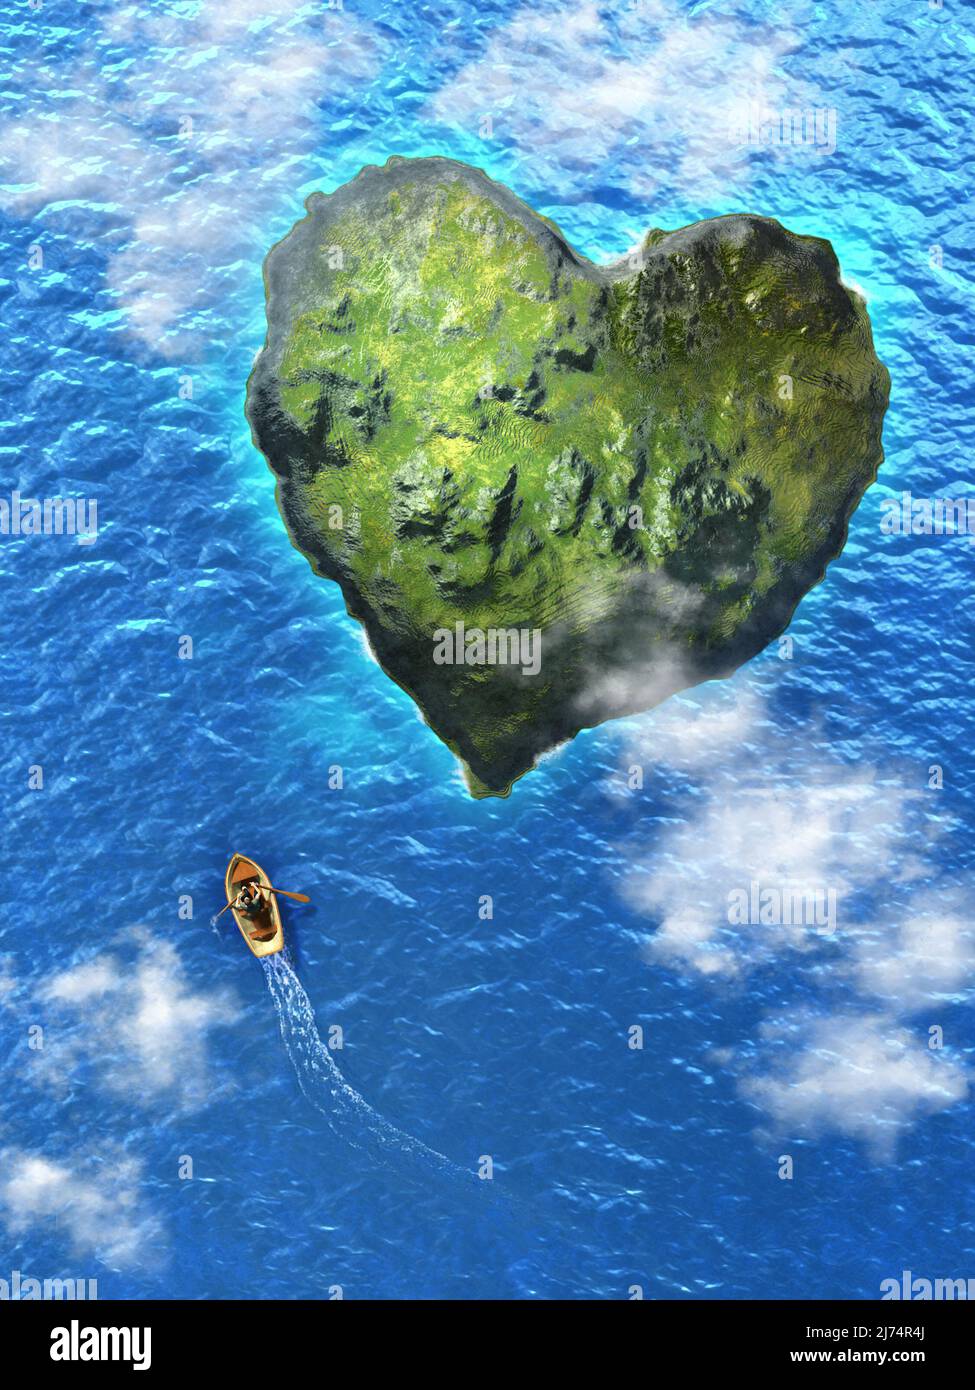 Small rowboat heading to an heart shaped island. Digital illustration. Stock Photo